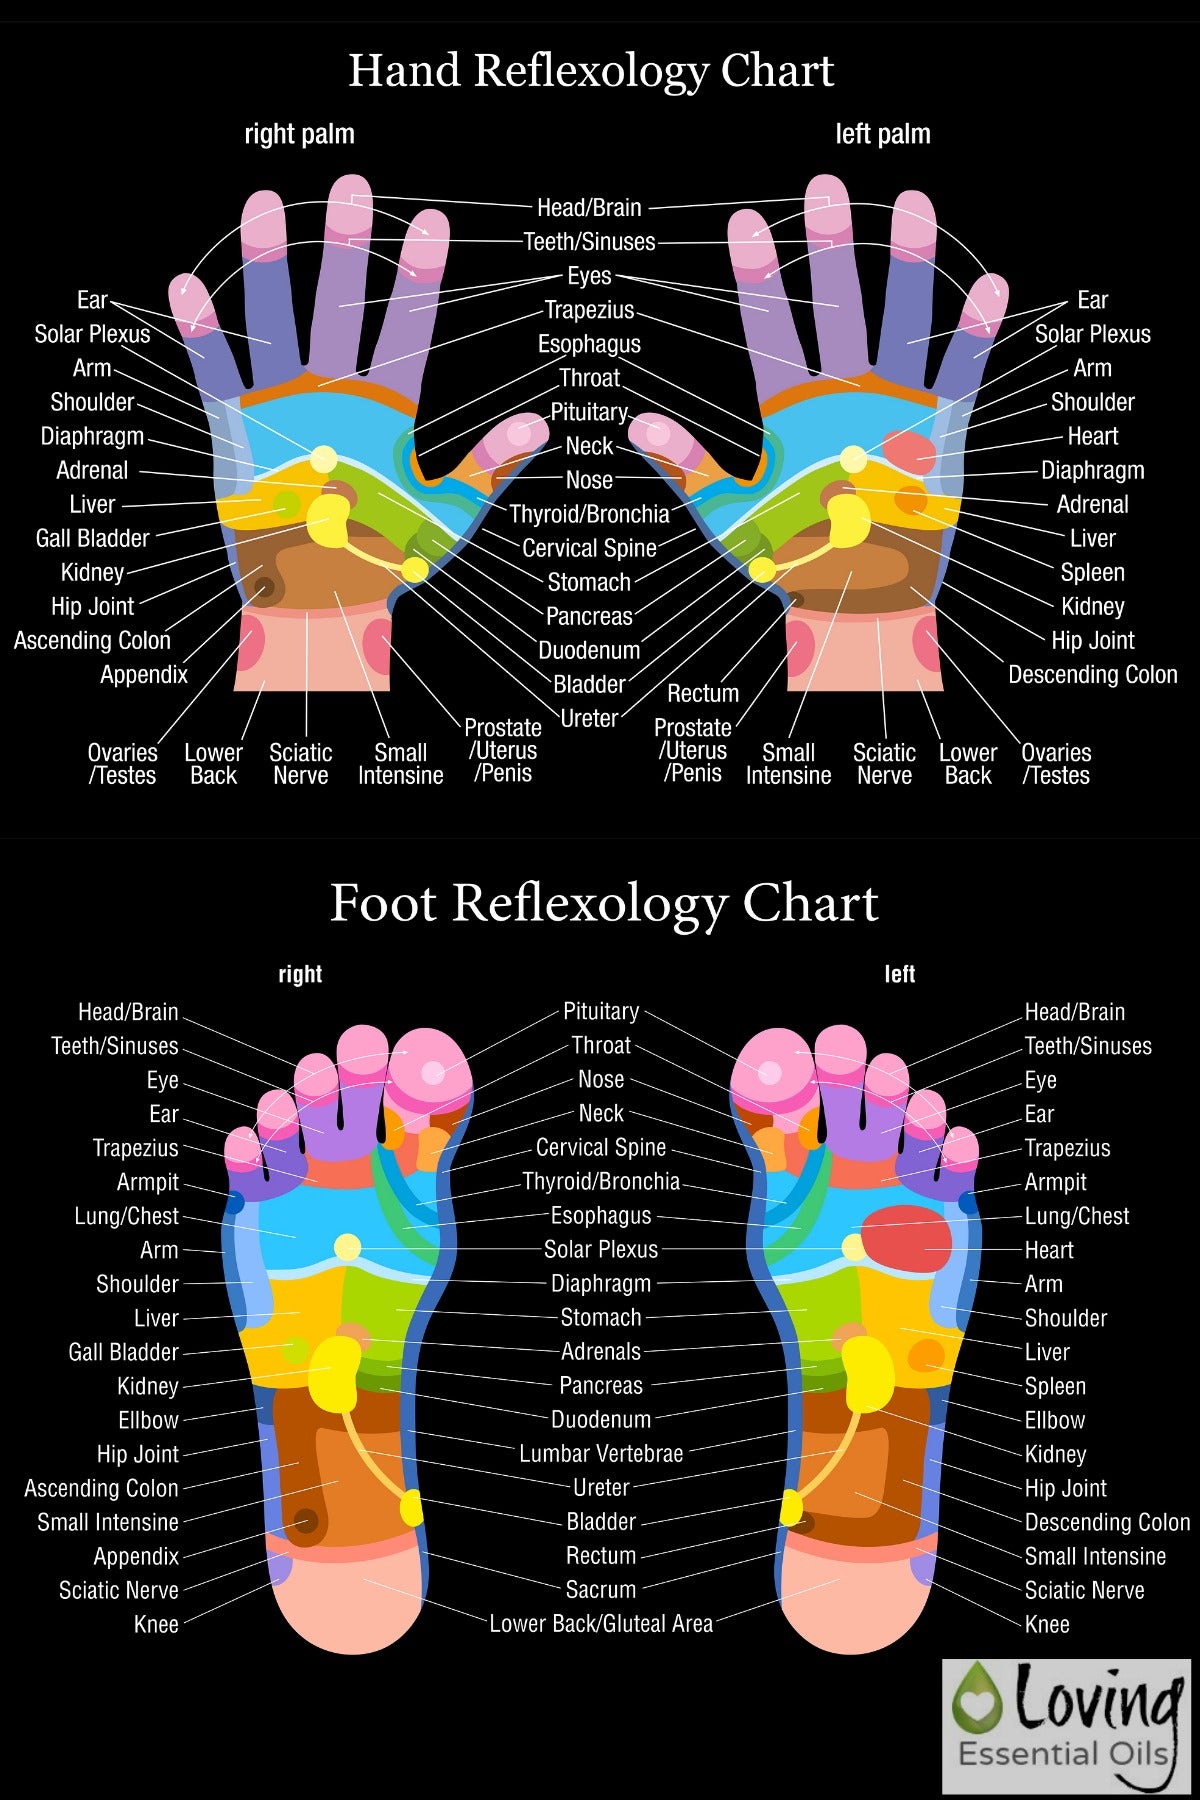 Essential OIl Chart for Hand Reflexology